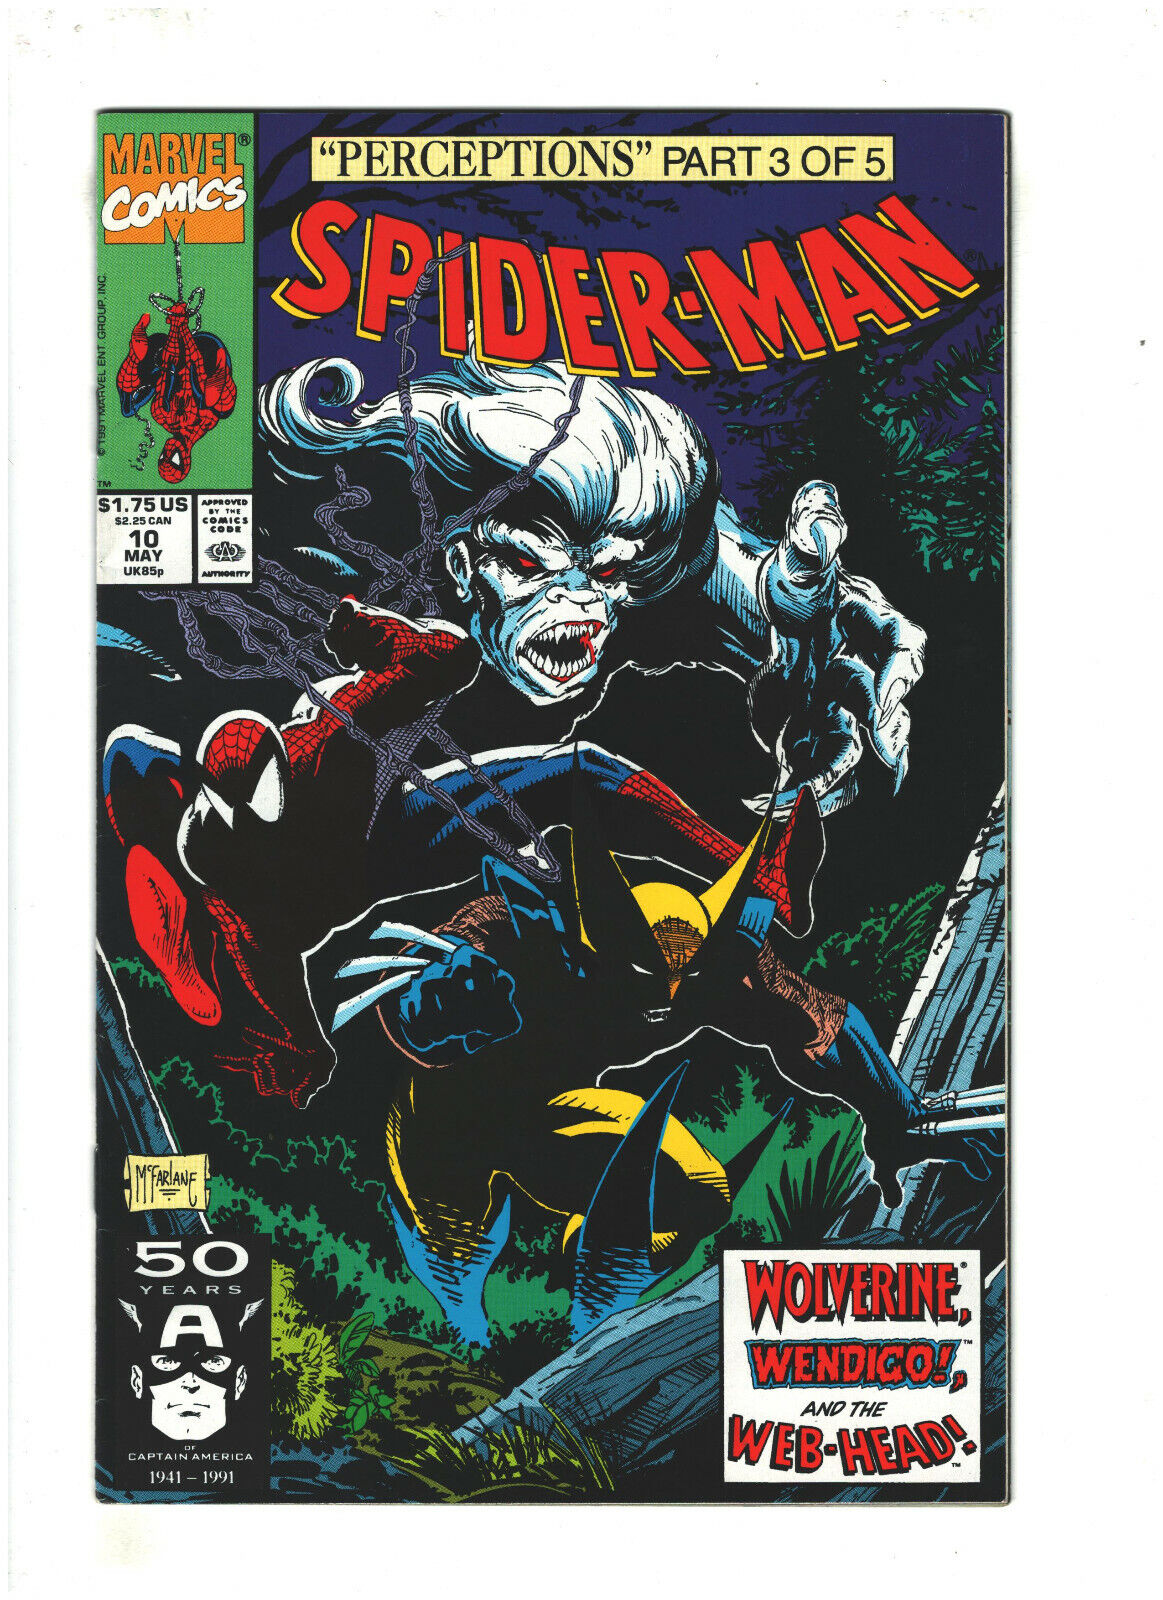 Spider-man #10 VF+ 8.5 Marvel Comics 1991 Todd McFarlane, Perceptions, Wolverine